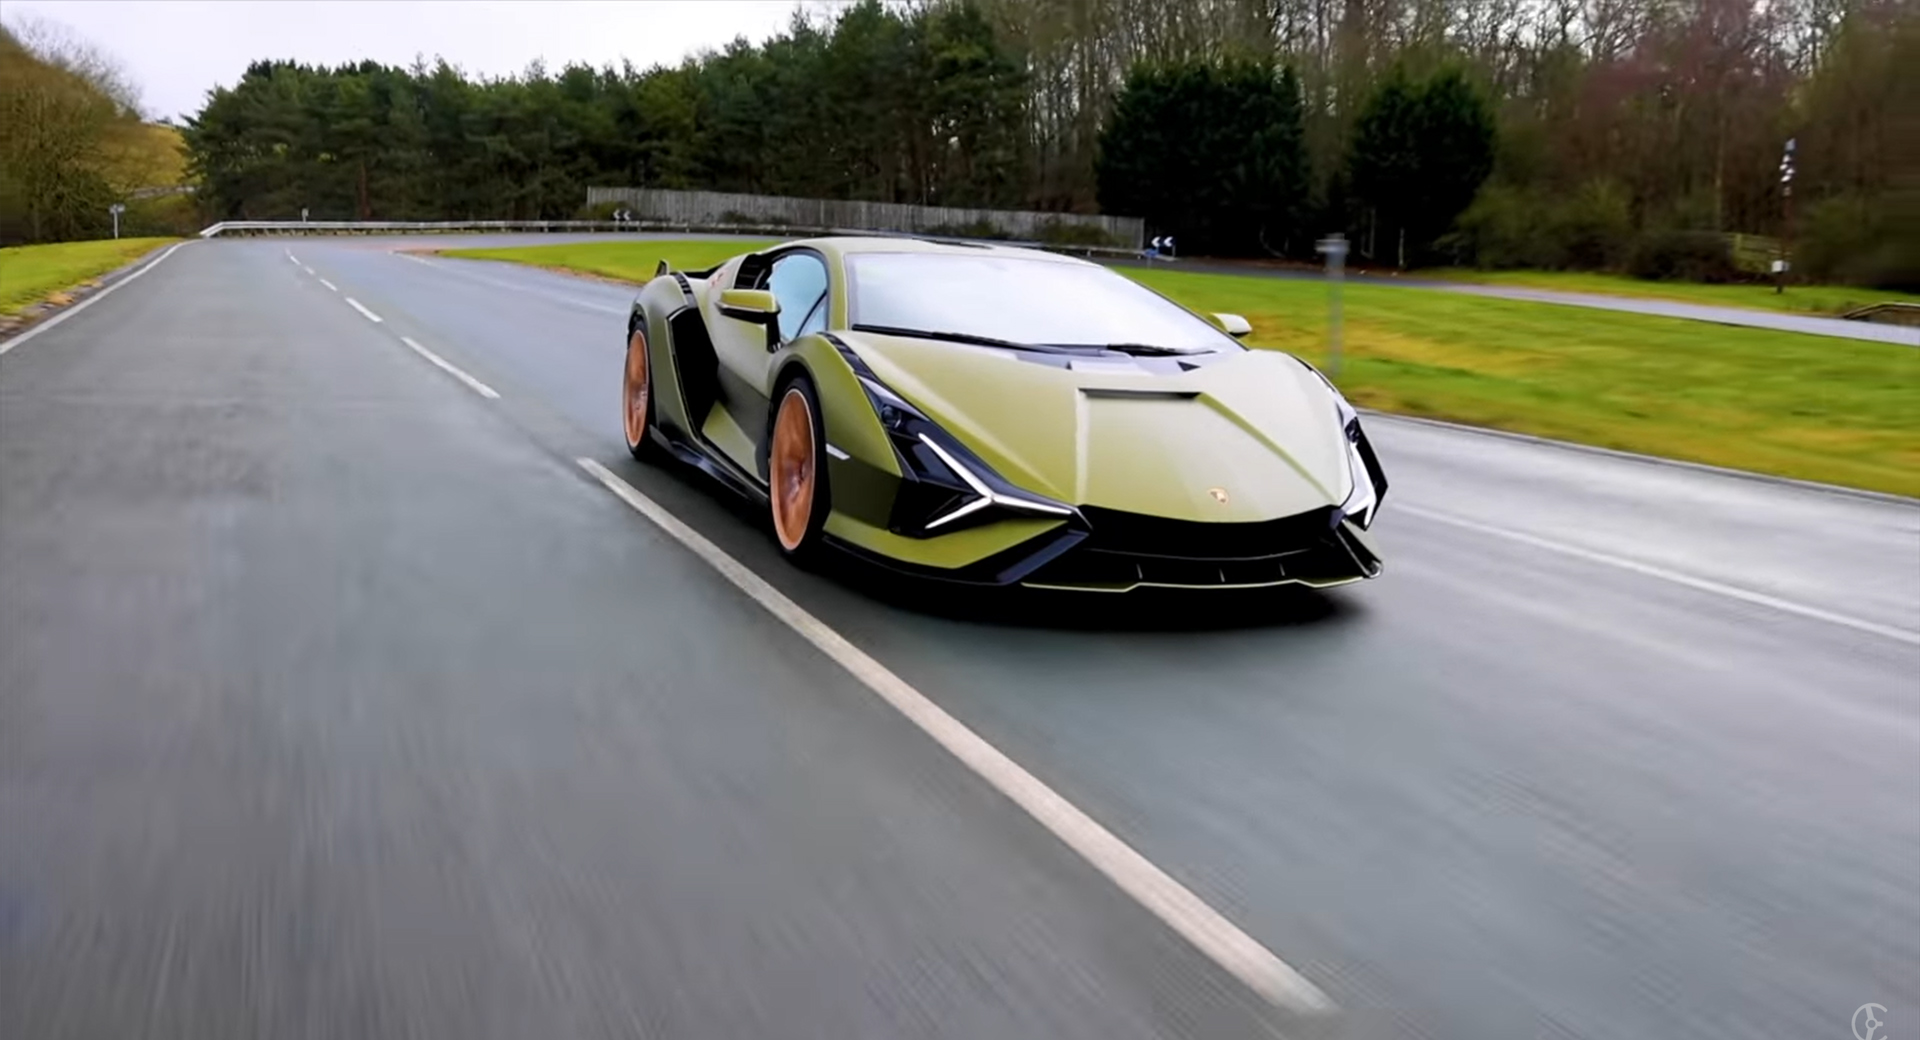 Lamborghini Sian FKP 37 2021 review – a supercar with a supercapacitor